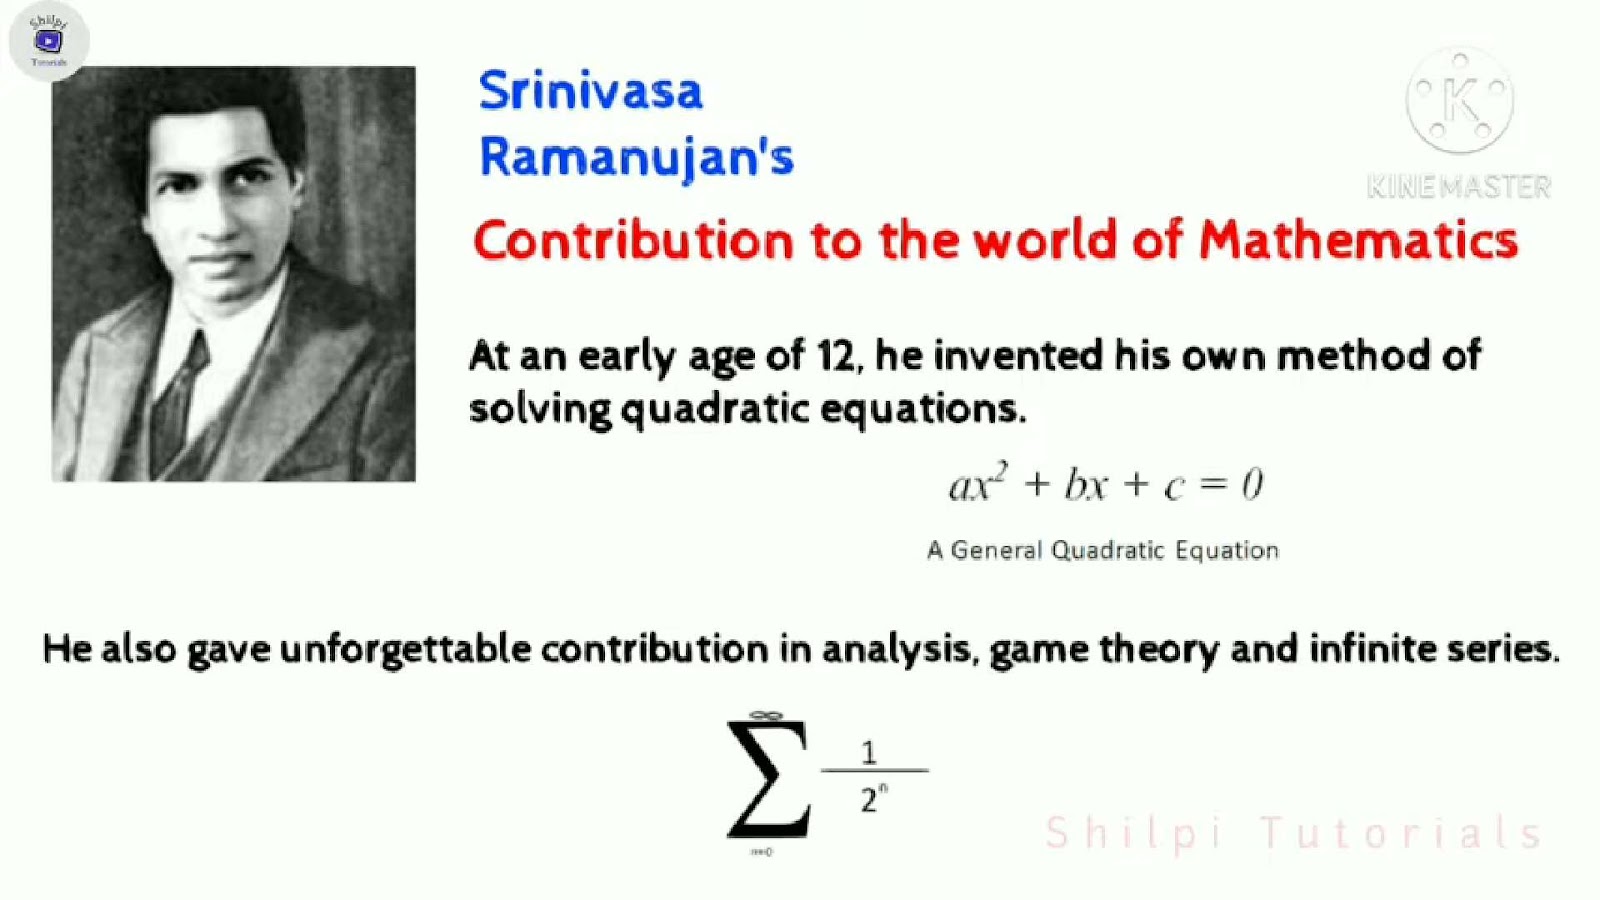 About Srinivasa Ramanujan